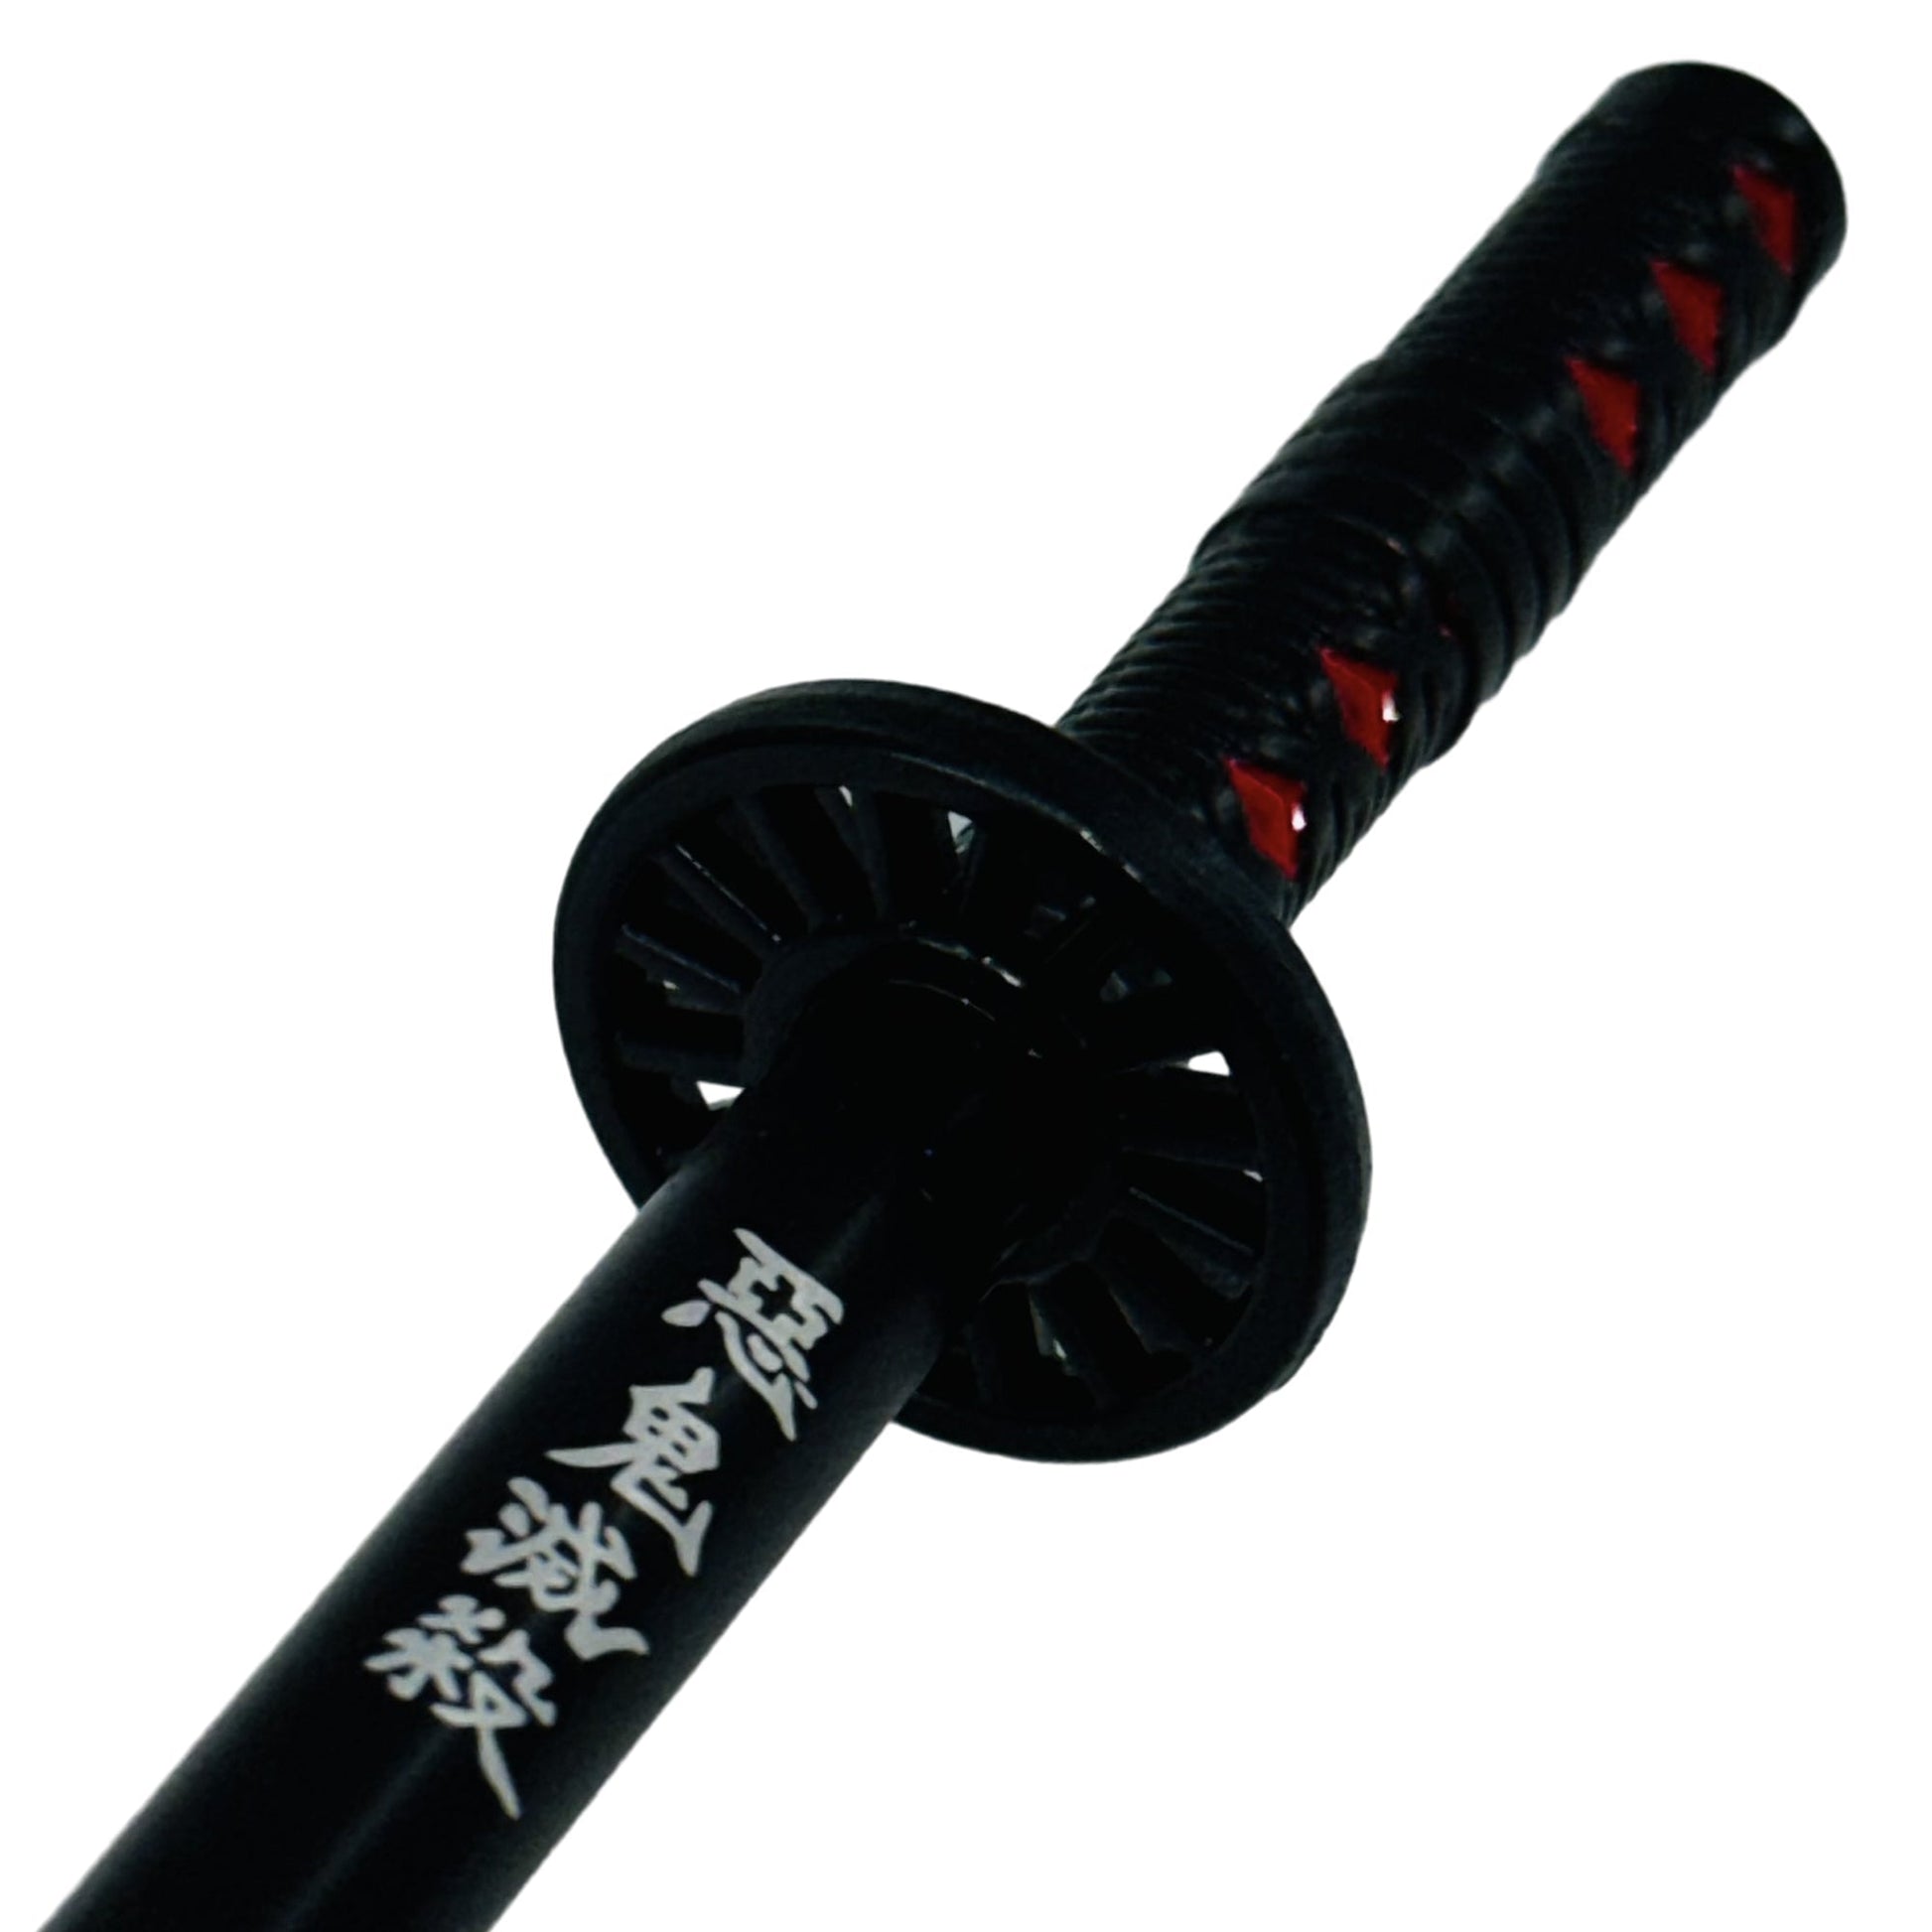 Demon Slayer Sword Pen Tanjiro's Sword Replica, Rollerball Writing Experience-2